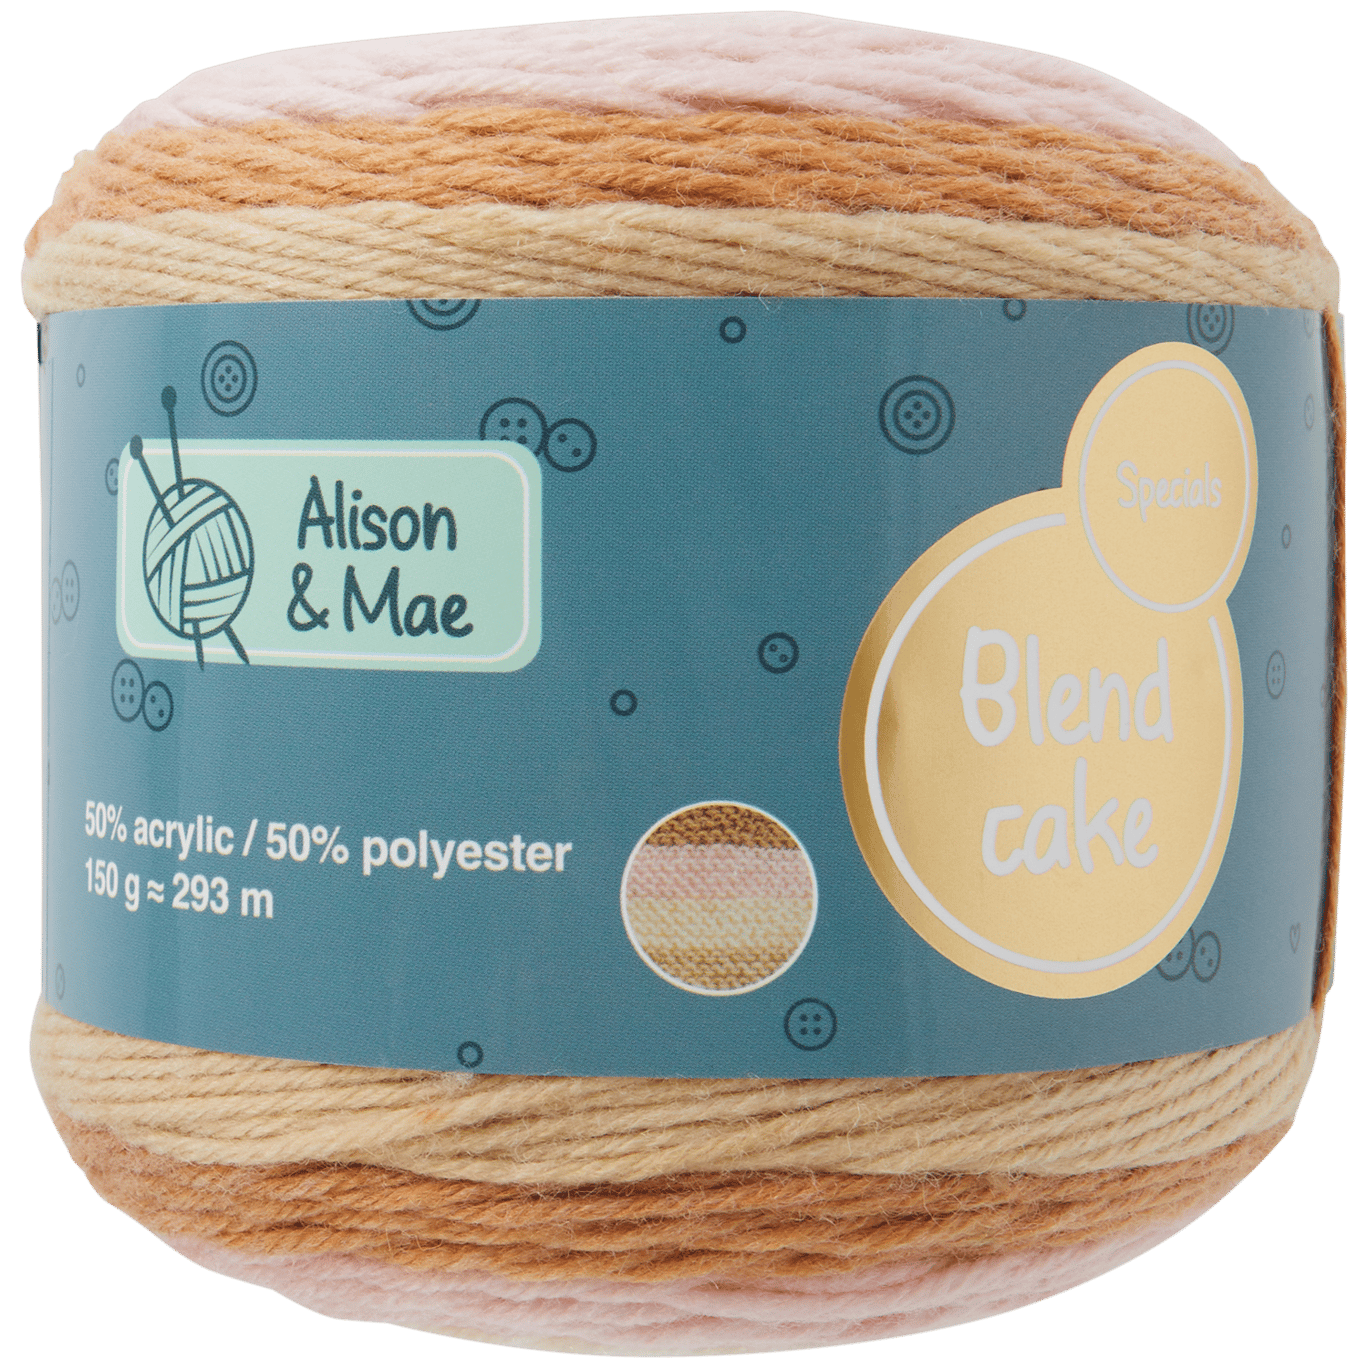 nicht periodieke De daadwerkelijke Alison & Mae breigaren Blend Cake | Action.com